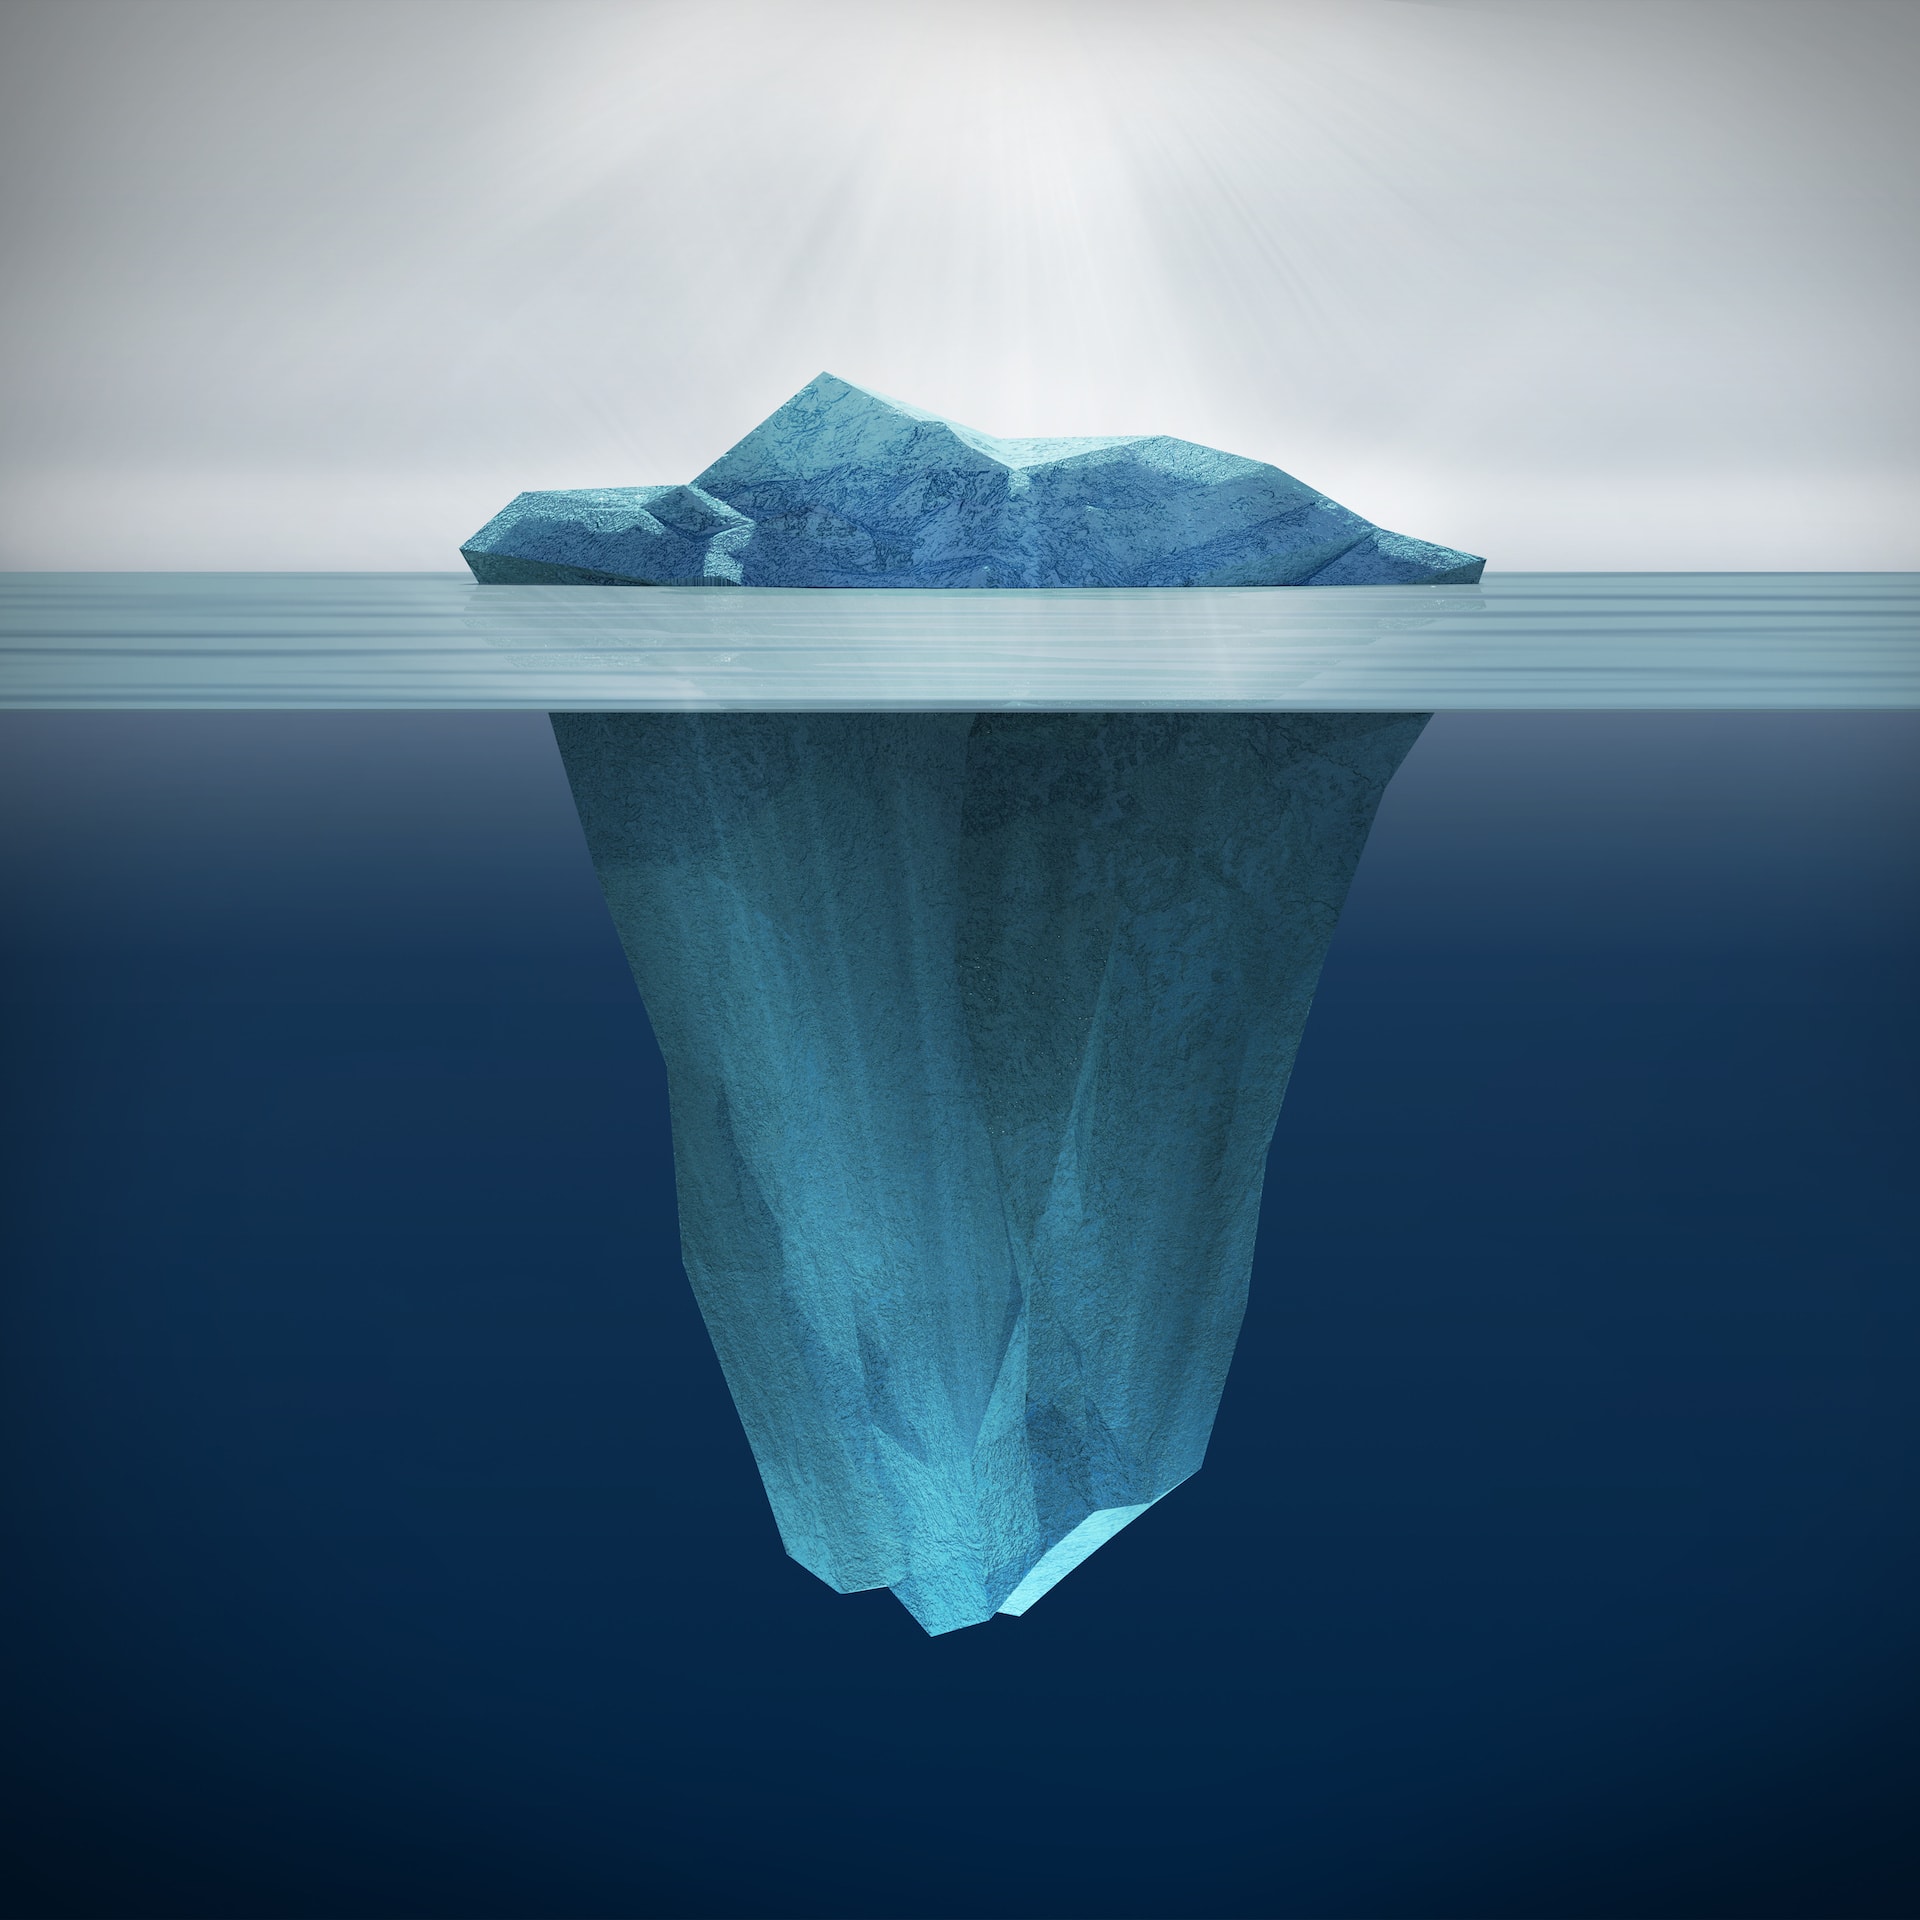 Tales of a Technician: The Iceberg Illusion